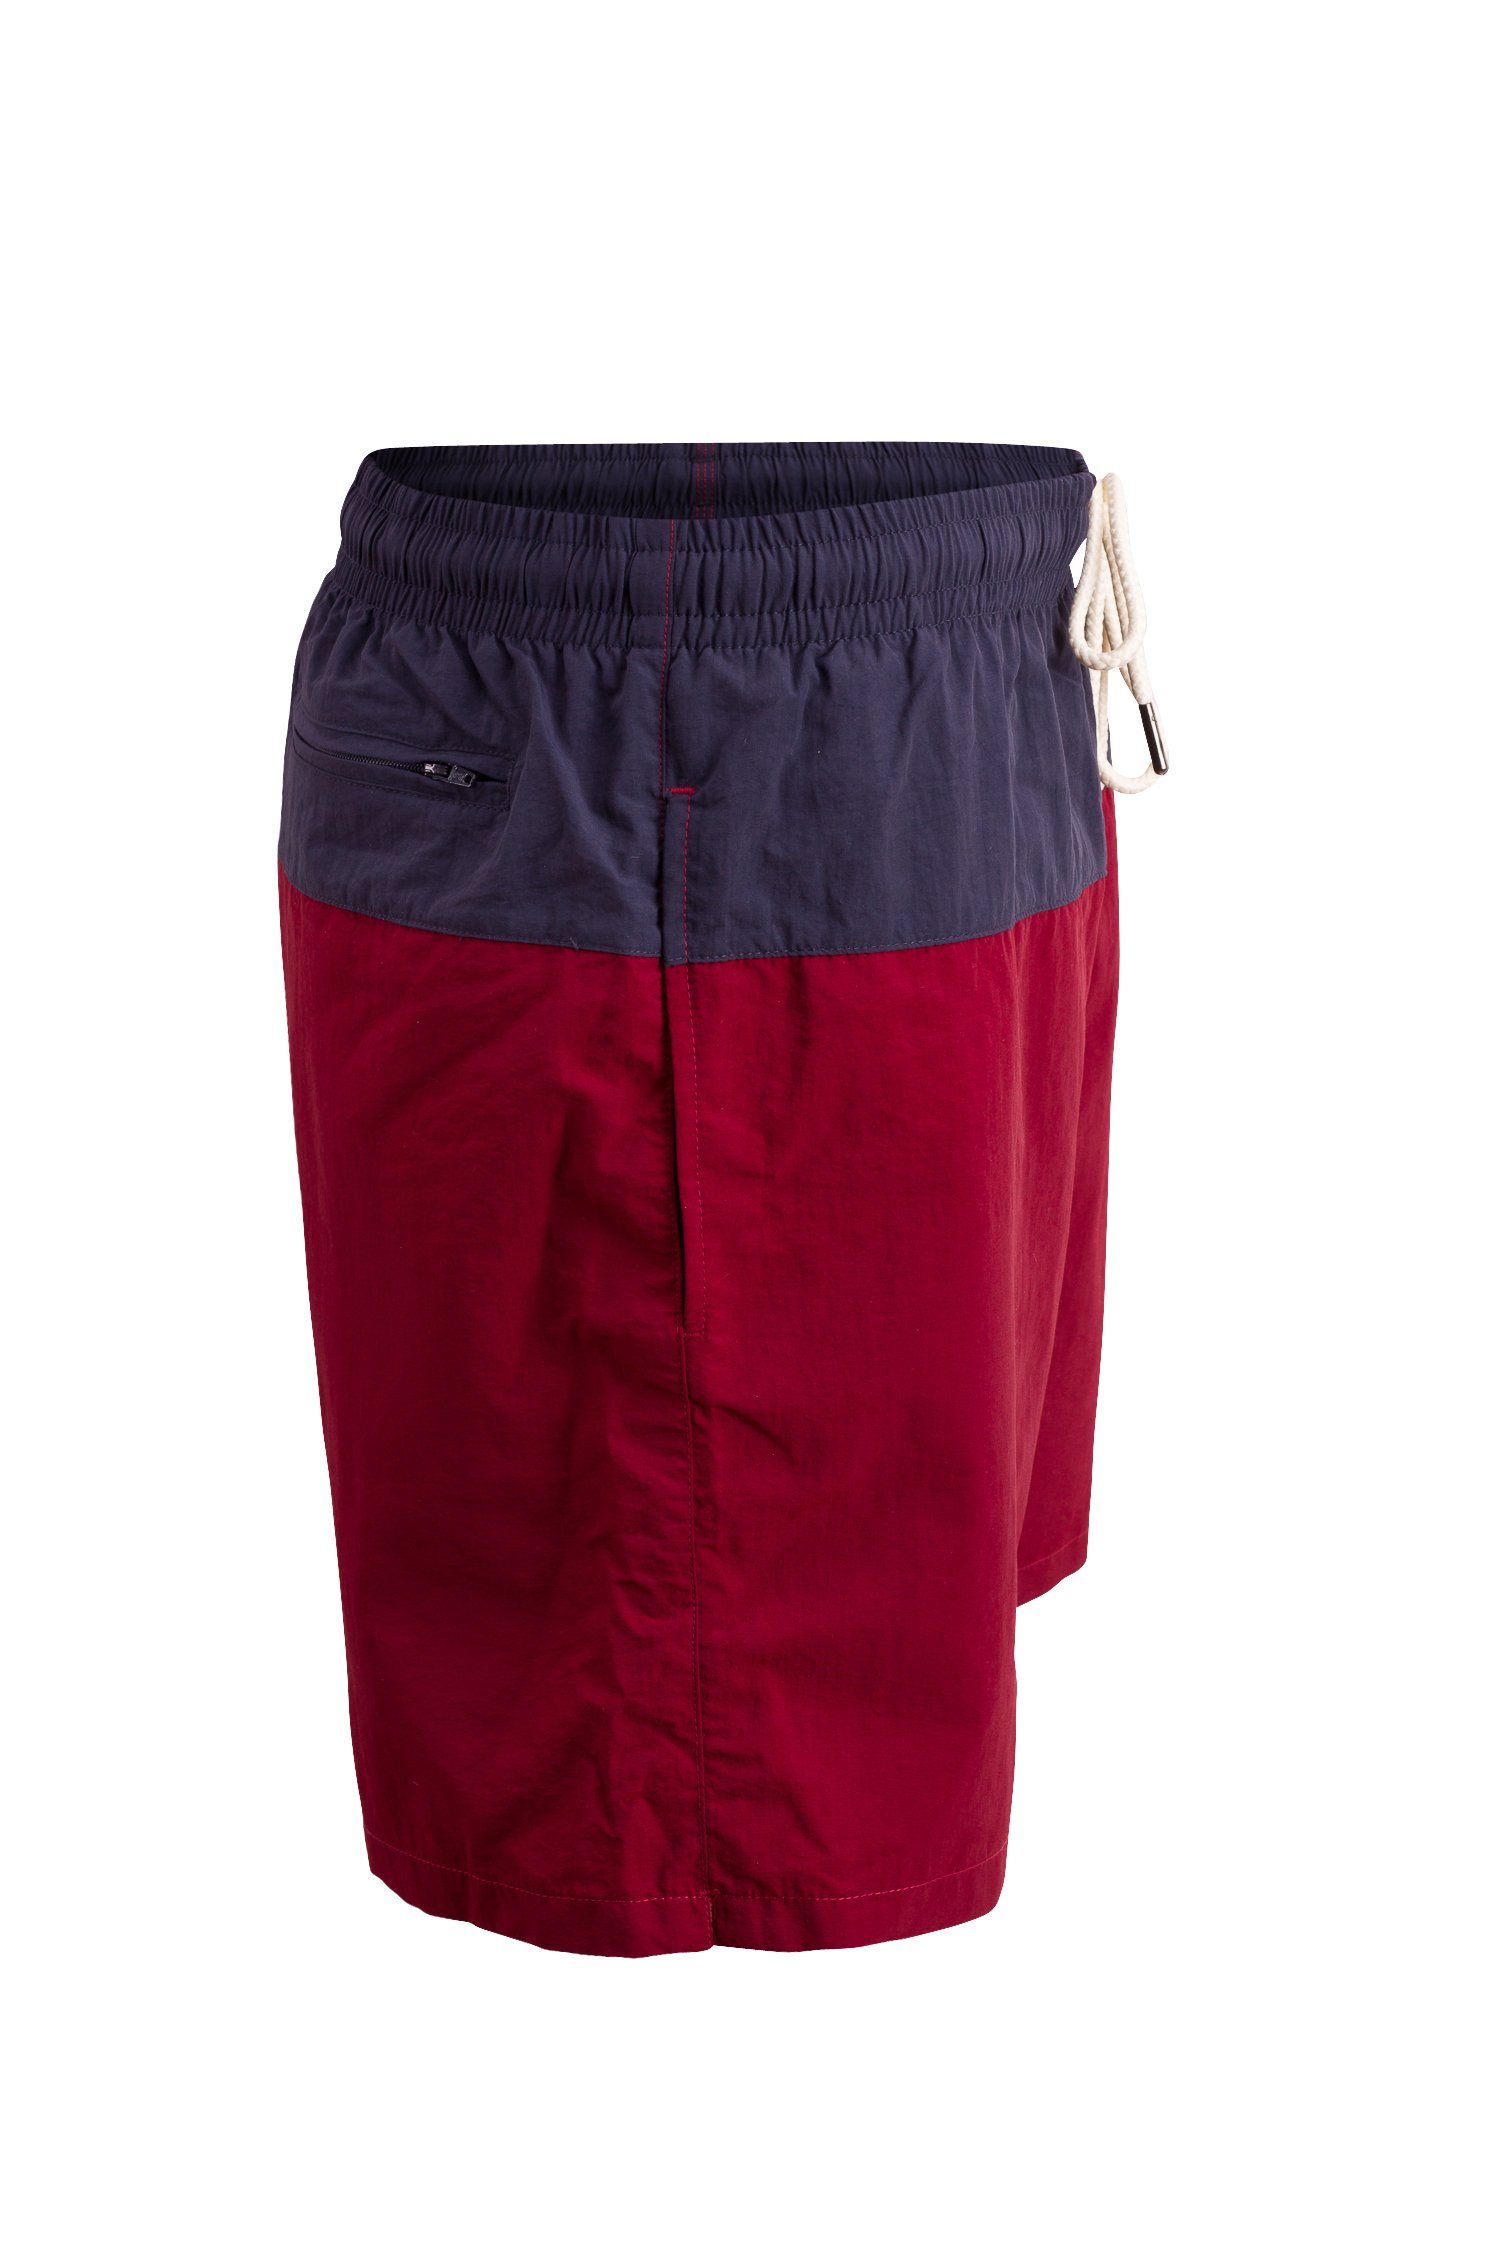 Manufaktur13 Badeshorts Swim Shorts - schnelltrocknend Badehosen Red/Navy